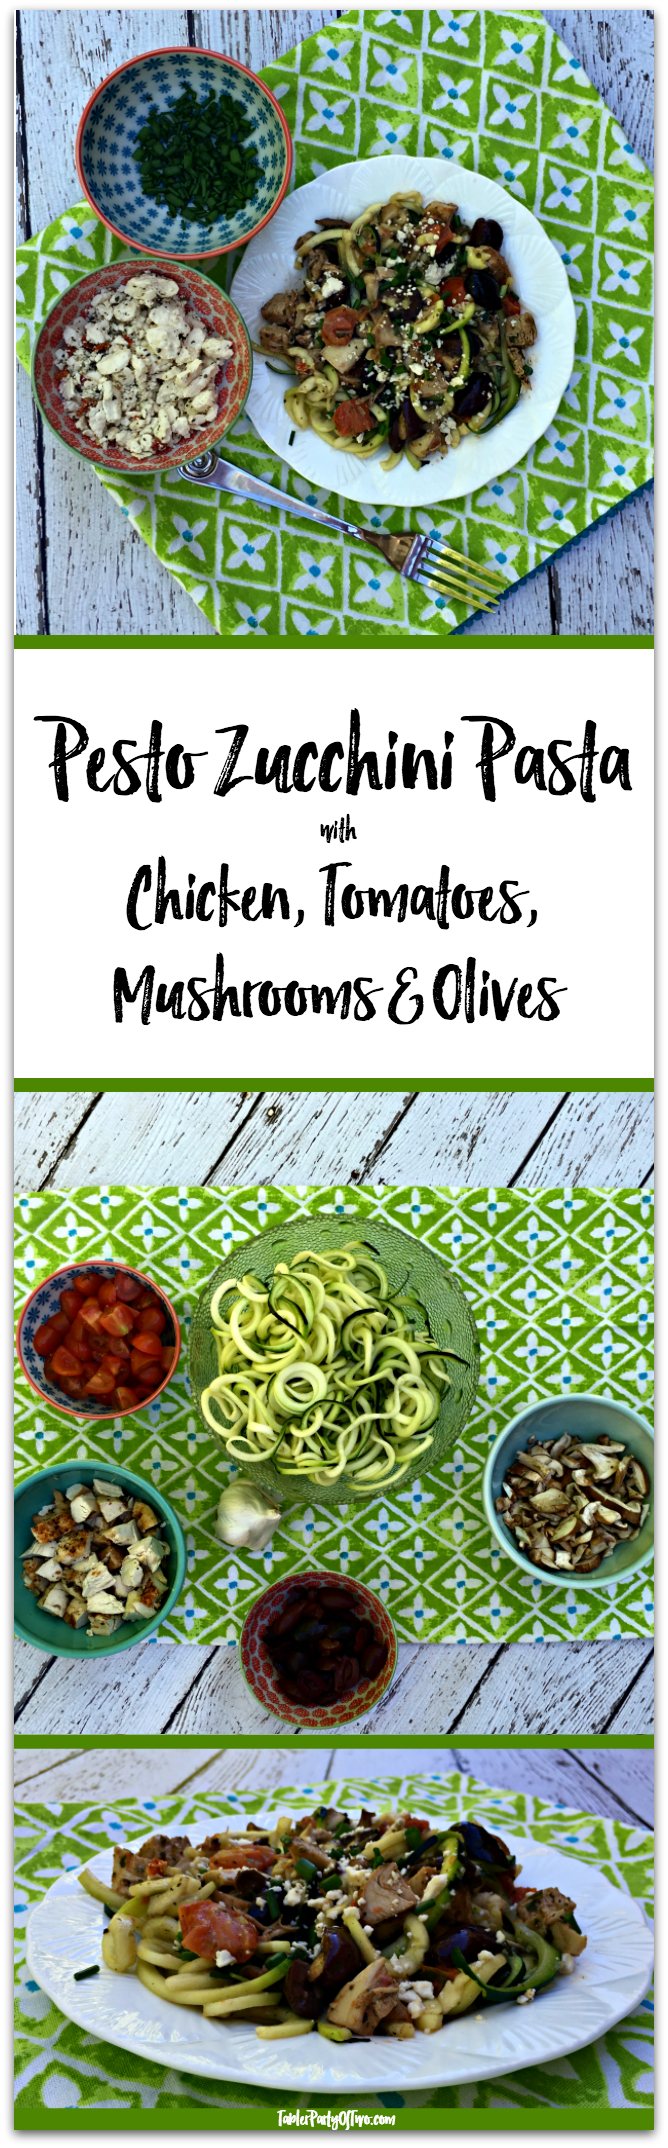 Pesto-Zucchini-Pasta